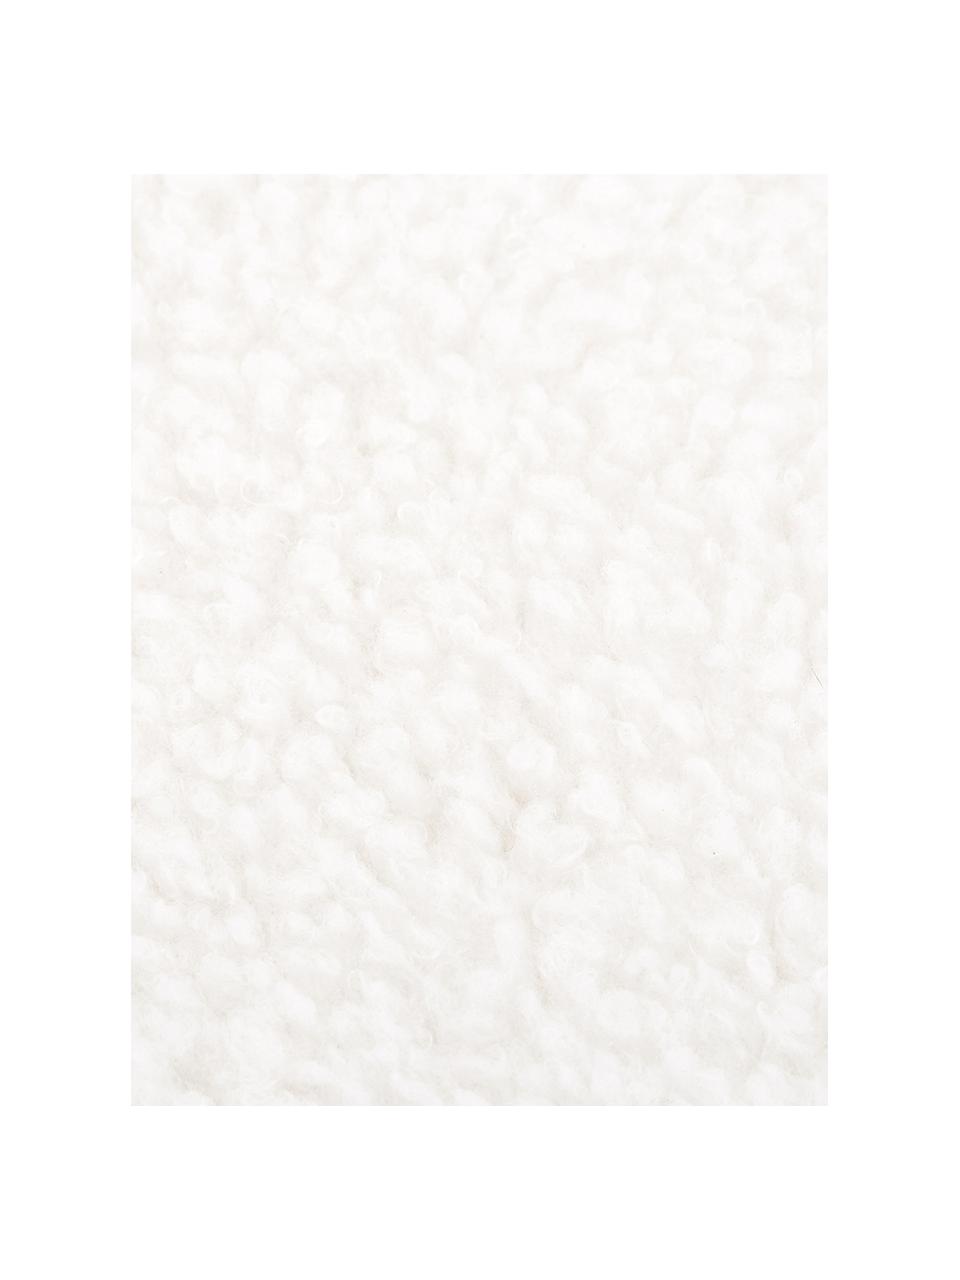 Federa arredo soffice in teddy color crema Mille, Retro: 100% poliestere (teddy), Crema, Larg. 30 x Lung. 50 cm